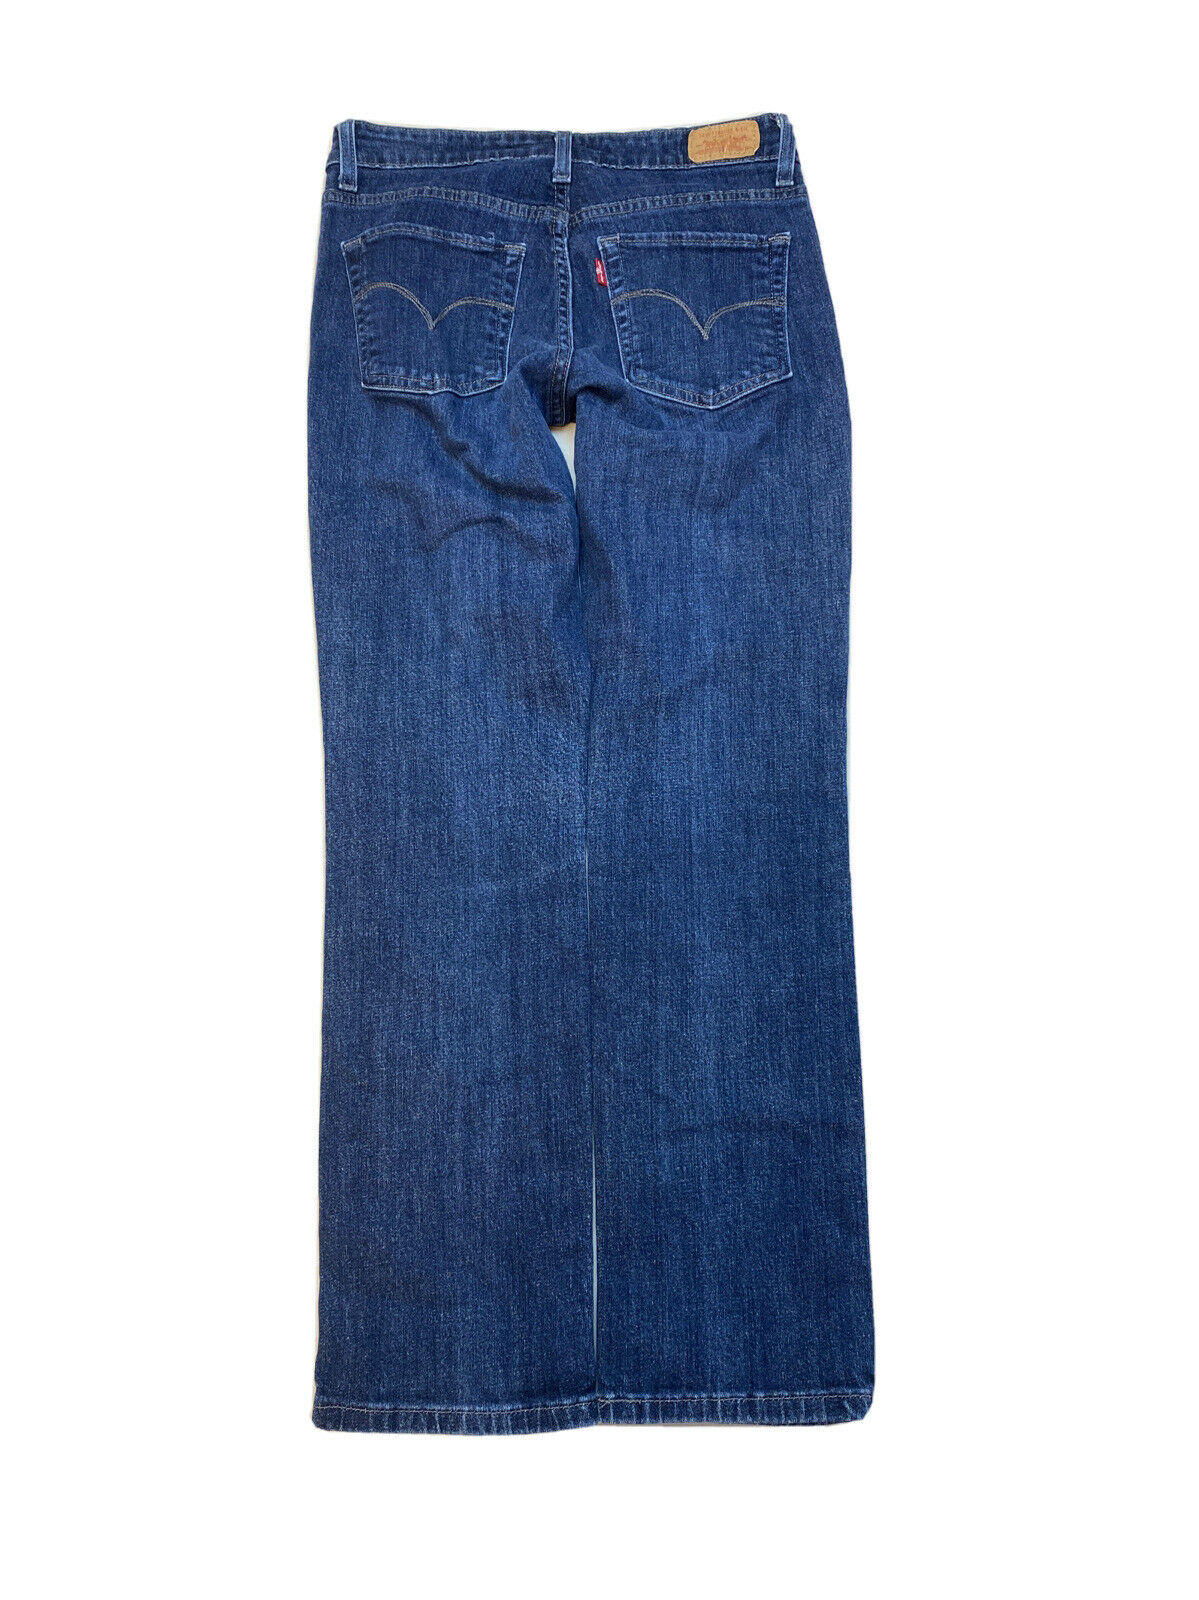 Levi's Women's Dark Wash Blue Denim Mid Rise Skinny Jeans Sz 6 Short